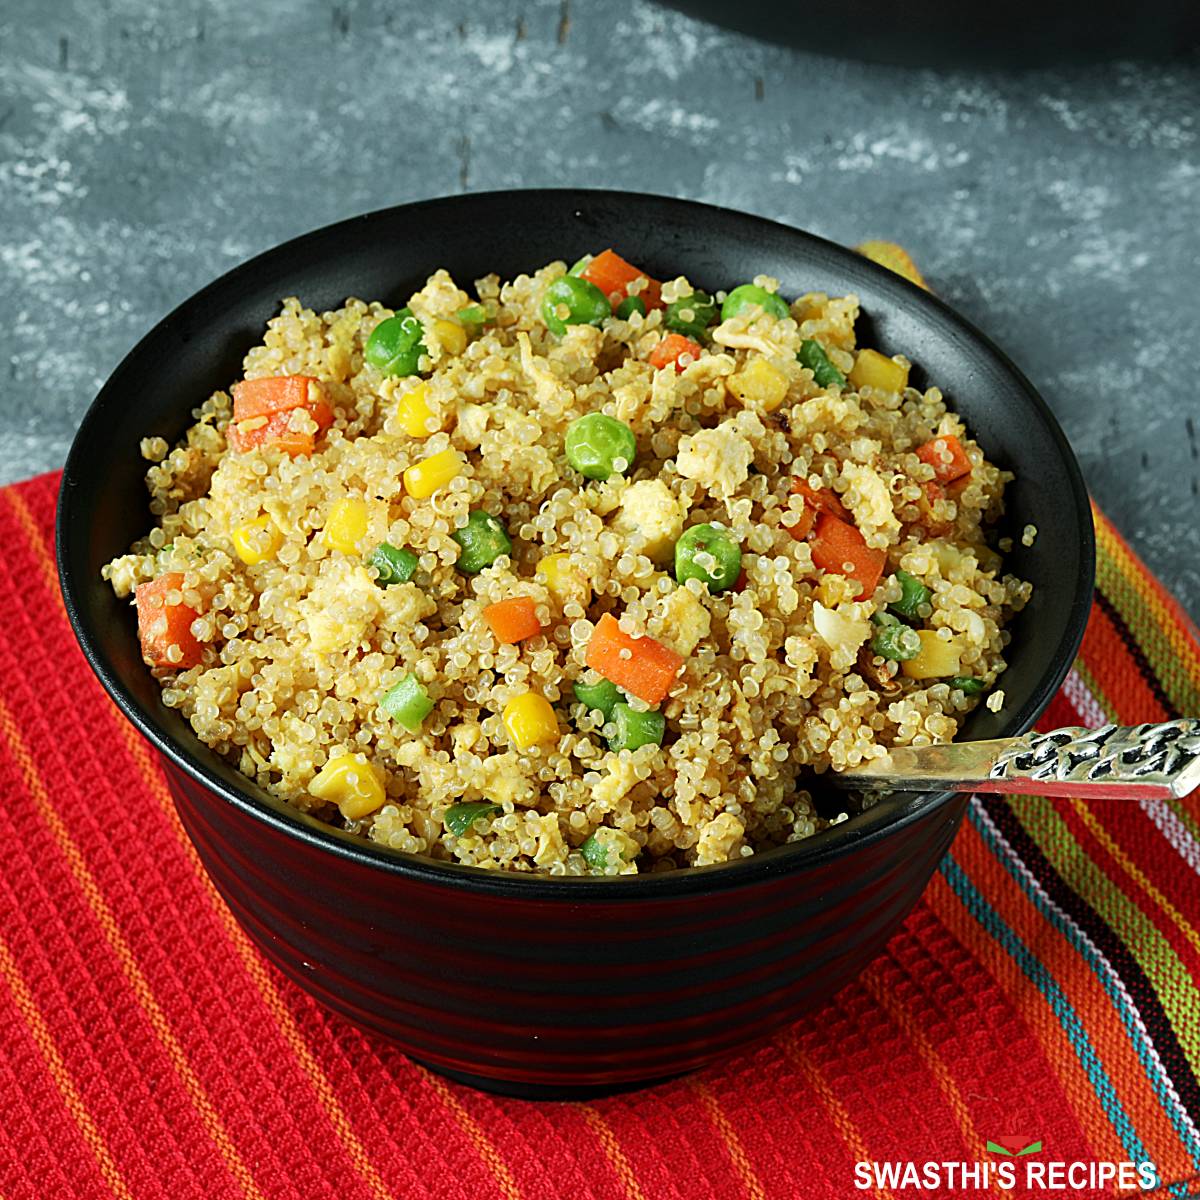 https://www.indianhealthyrecipes.com/wp-content/uploads/2022/10/quinoa-fried-rice.jpg